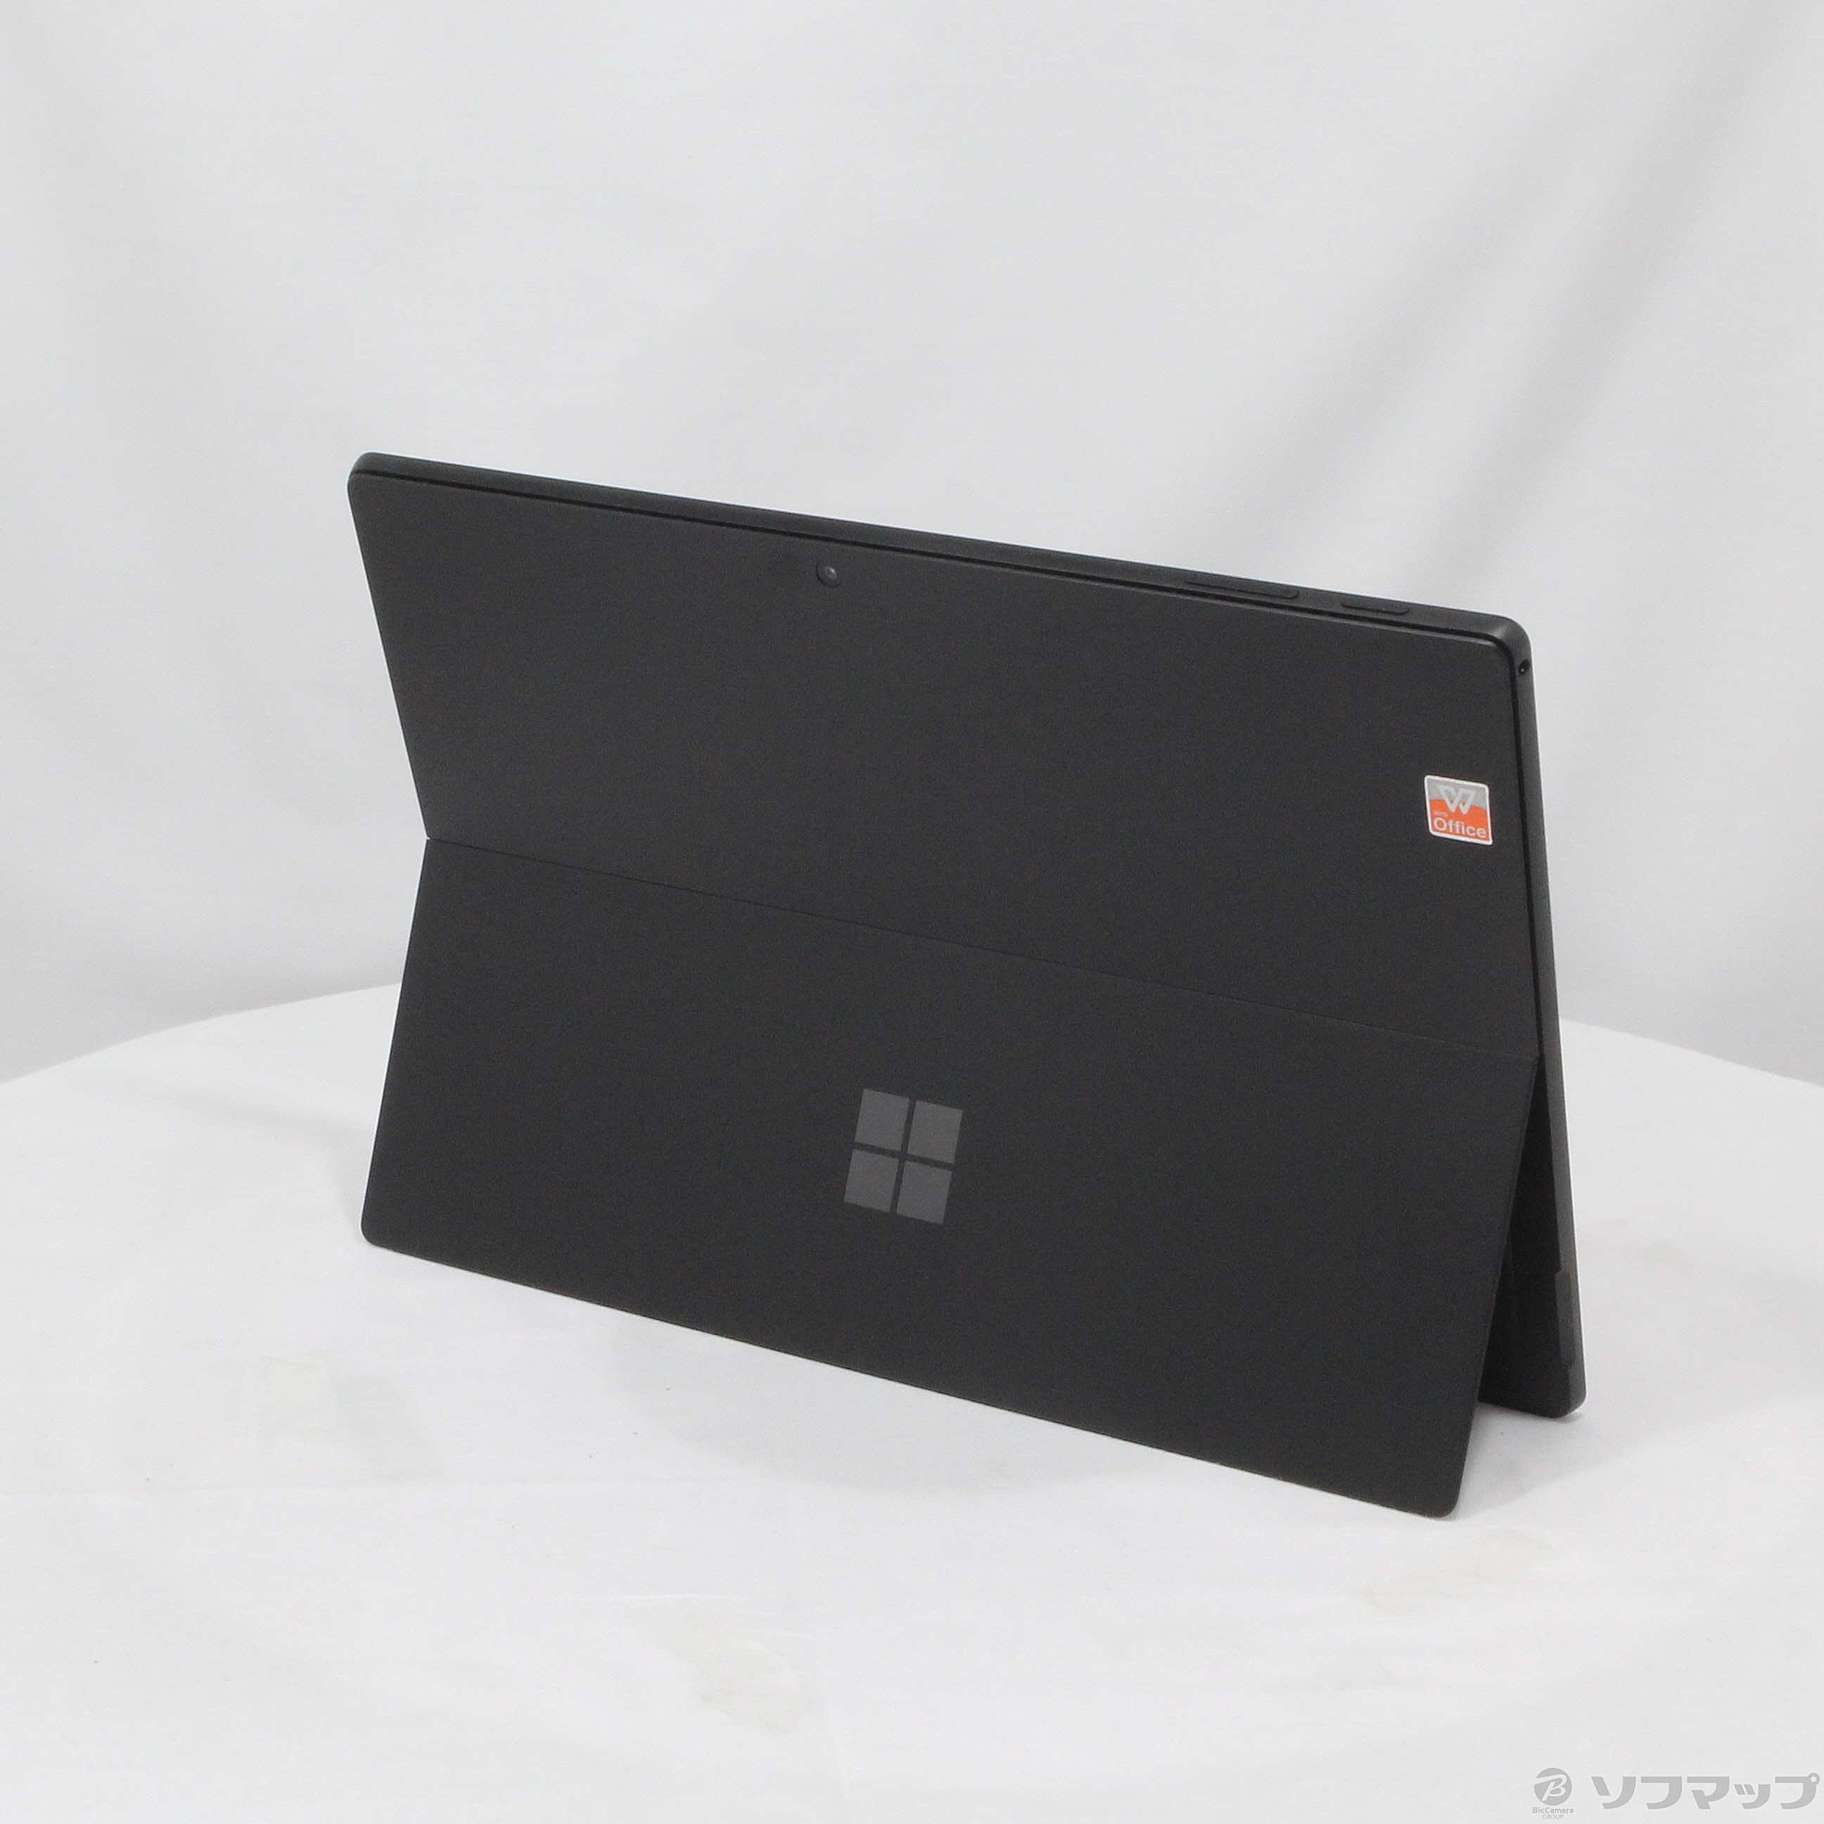 専用Surface Pro 7 黒 PUV-00027 office未使用